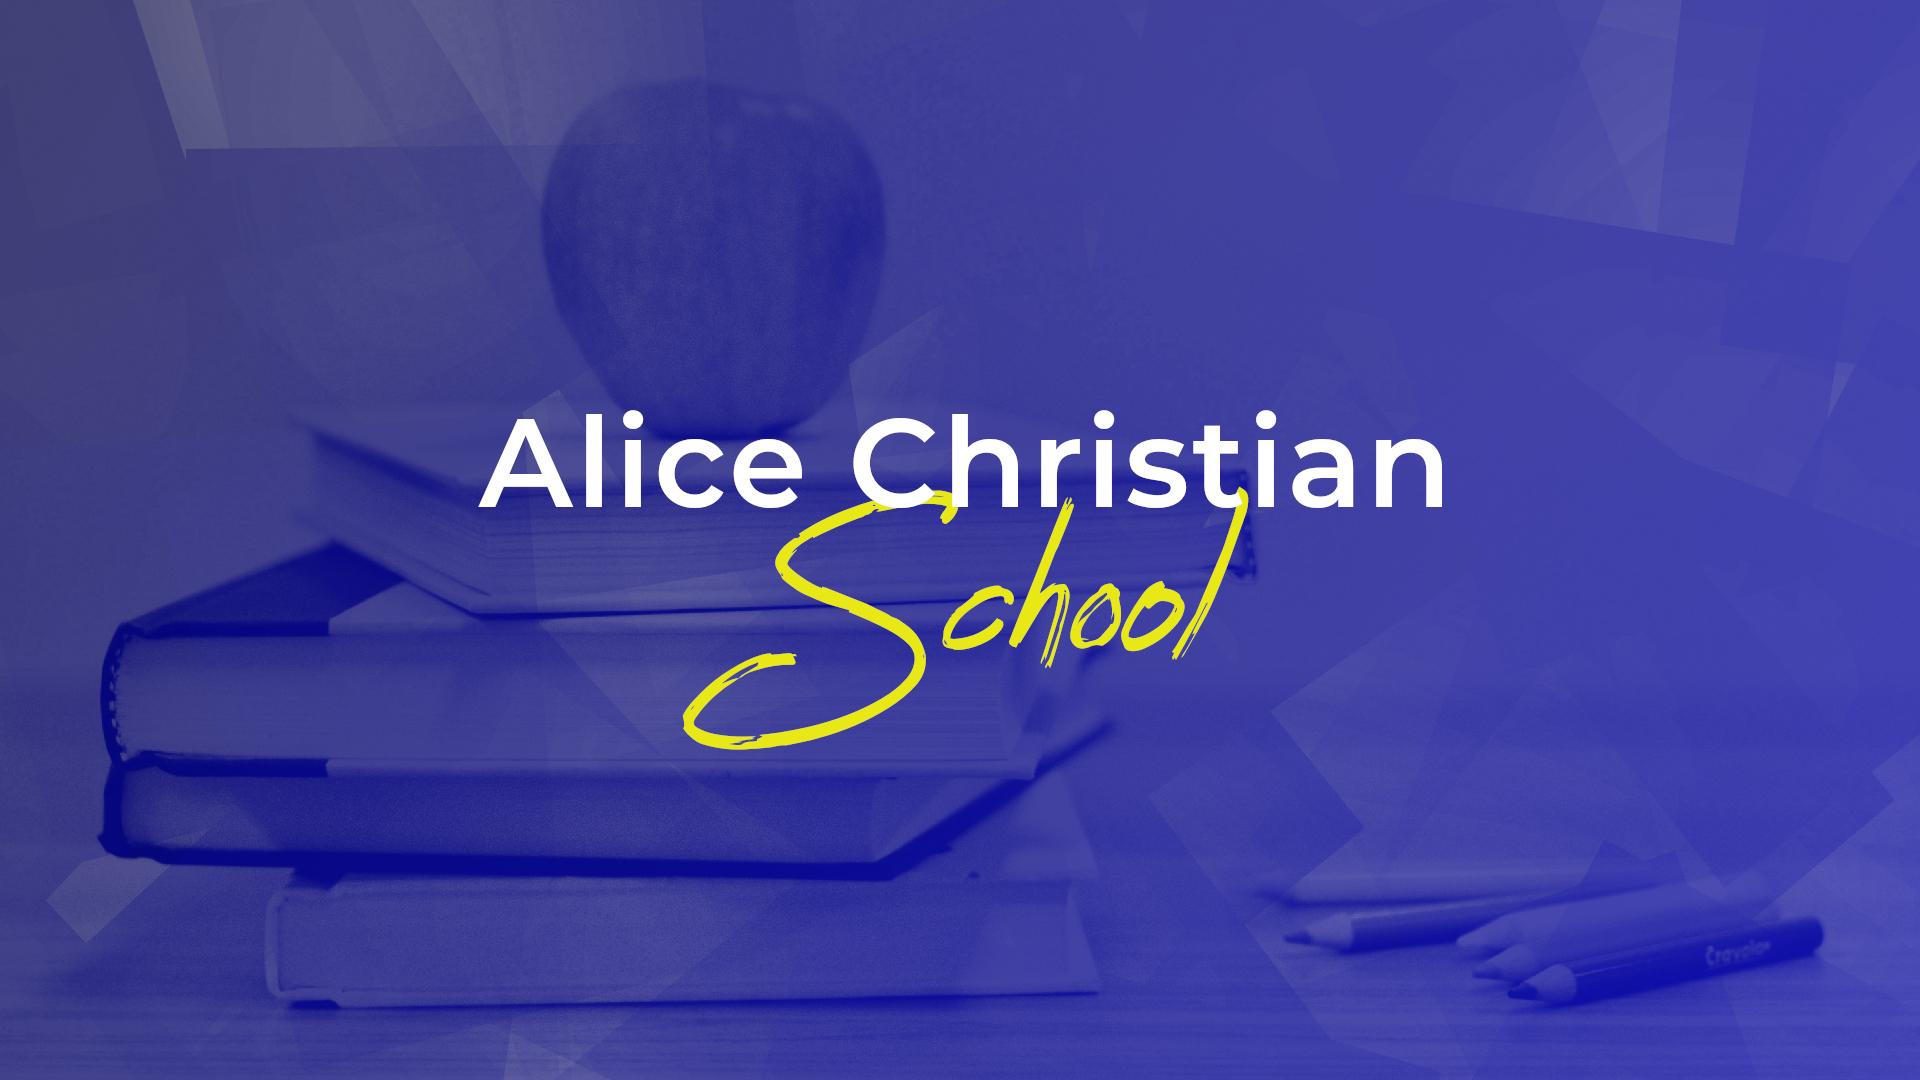 Alice Christian School at Cornerstone Baptist Church